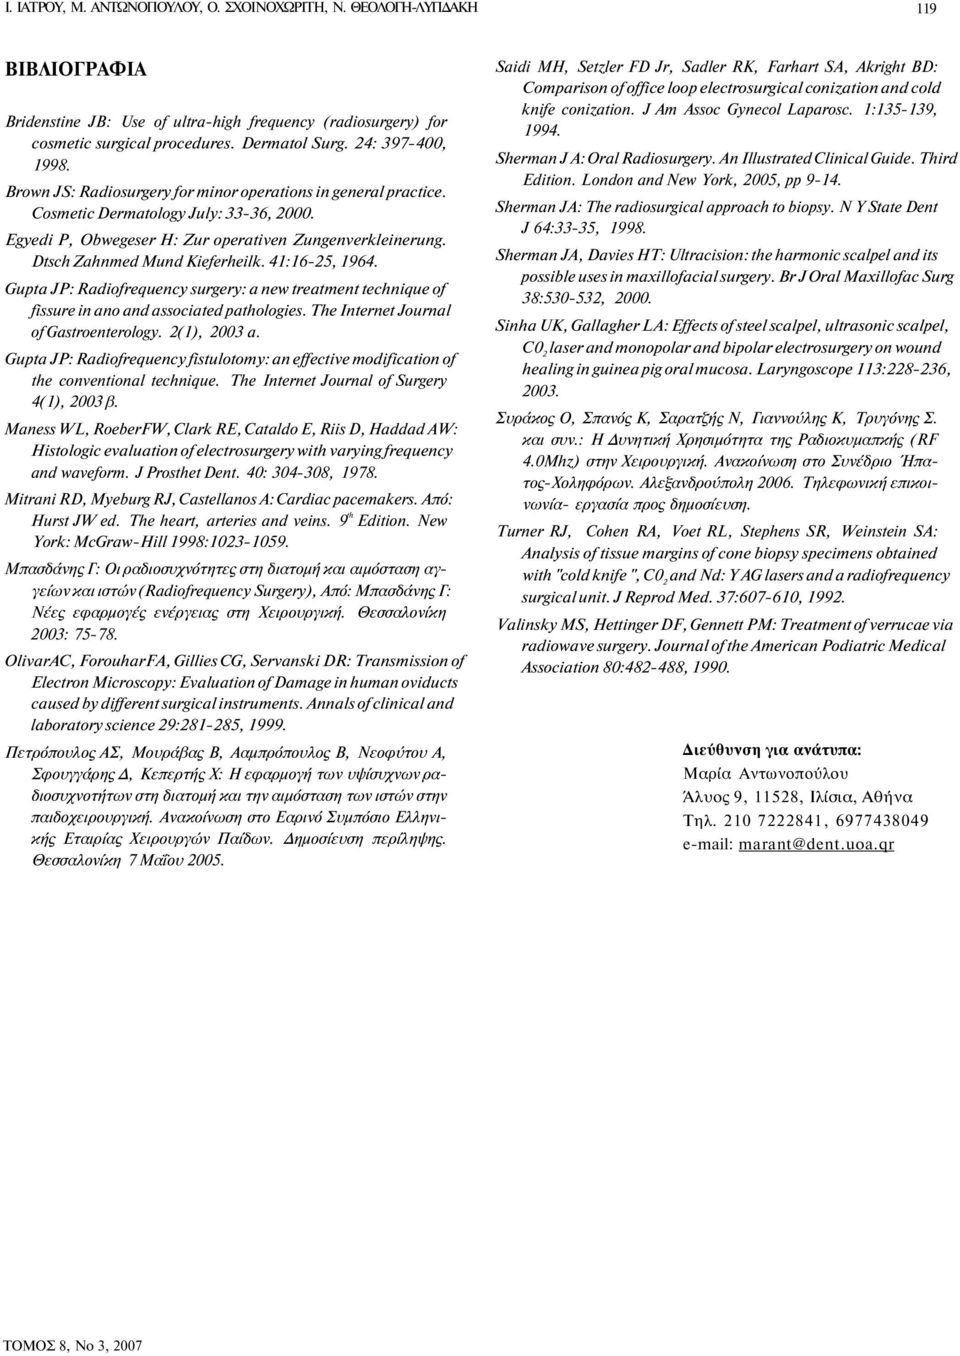 Dtsch Zahnmed Mund Kieferheilk. 41:16-25, 1964. Gupta JP: Radiofrequency surgery: a new treatment technique of fissure in ano and associated pathologies. The Internet Journal of Gastroenterology.